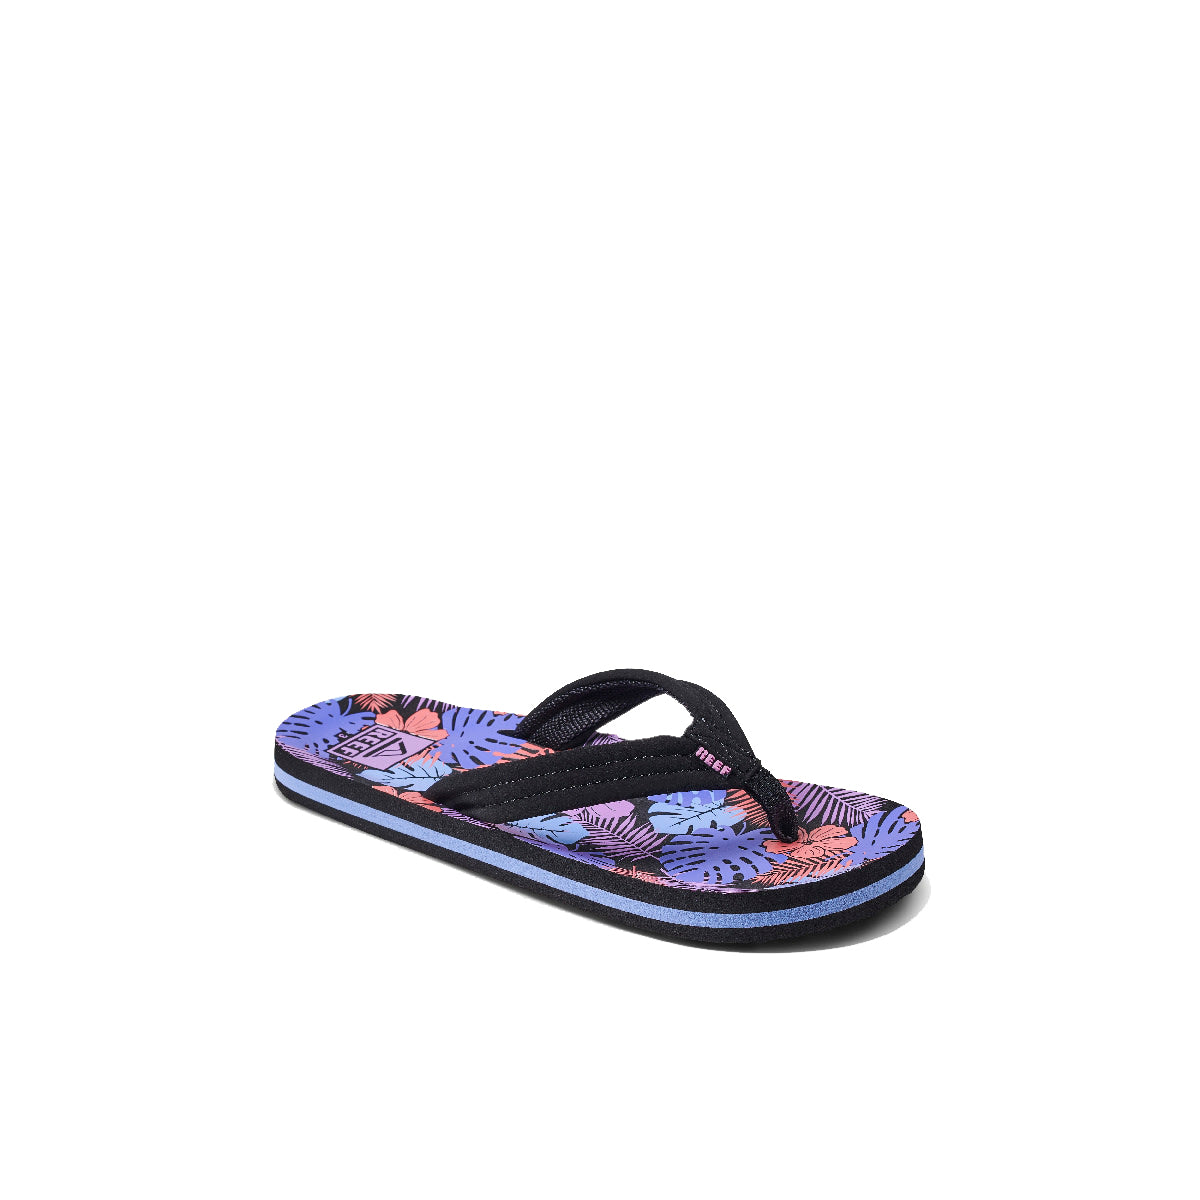 Reef Ahi Girls Sandal Purple Fronds 13 C